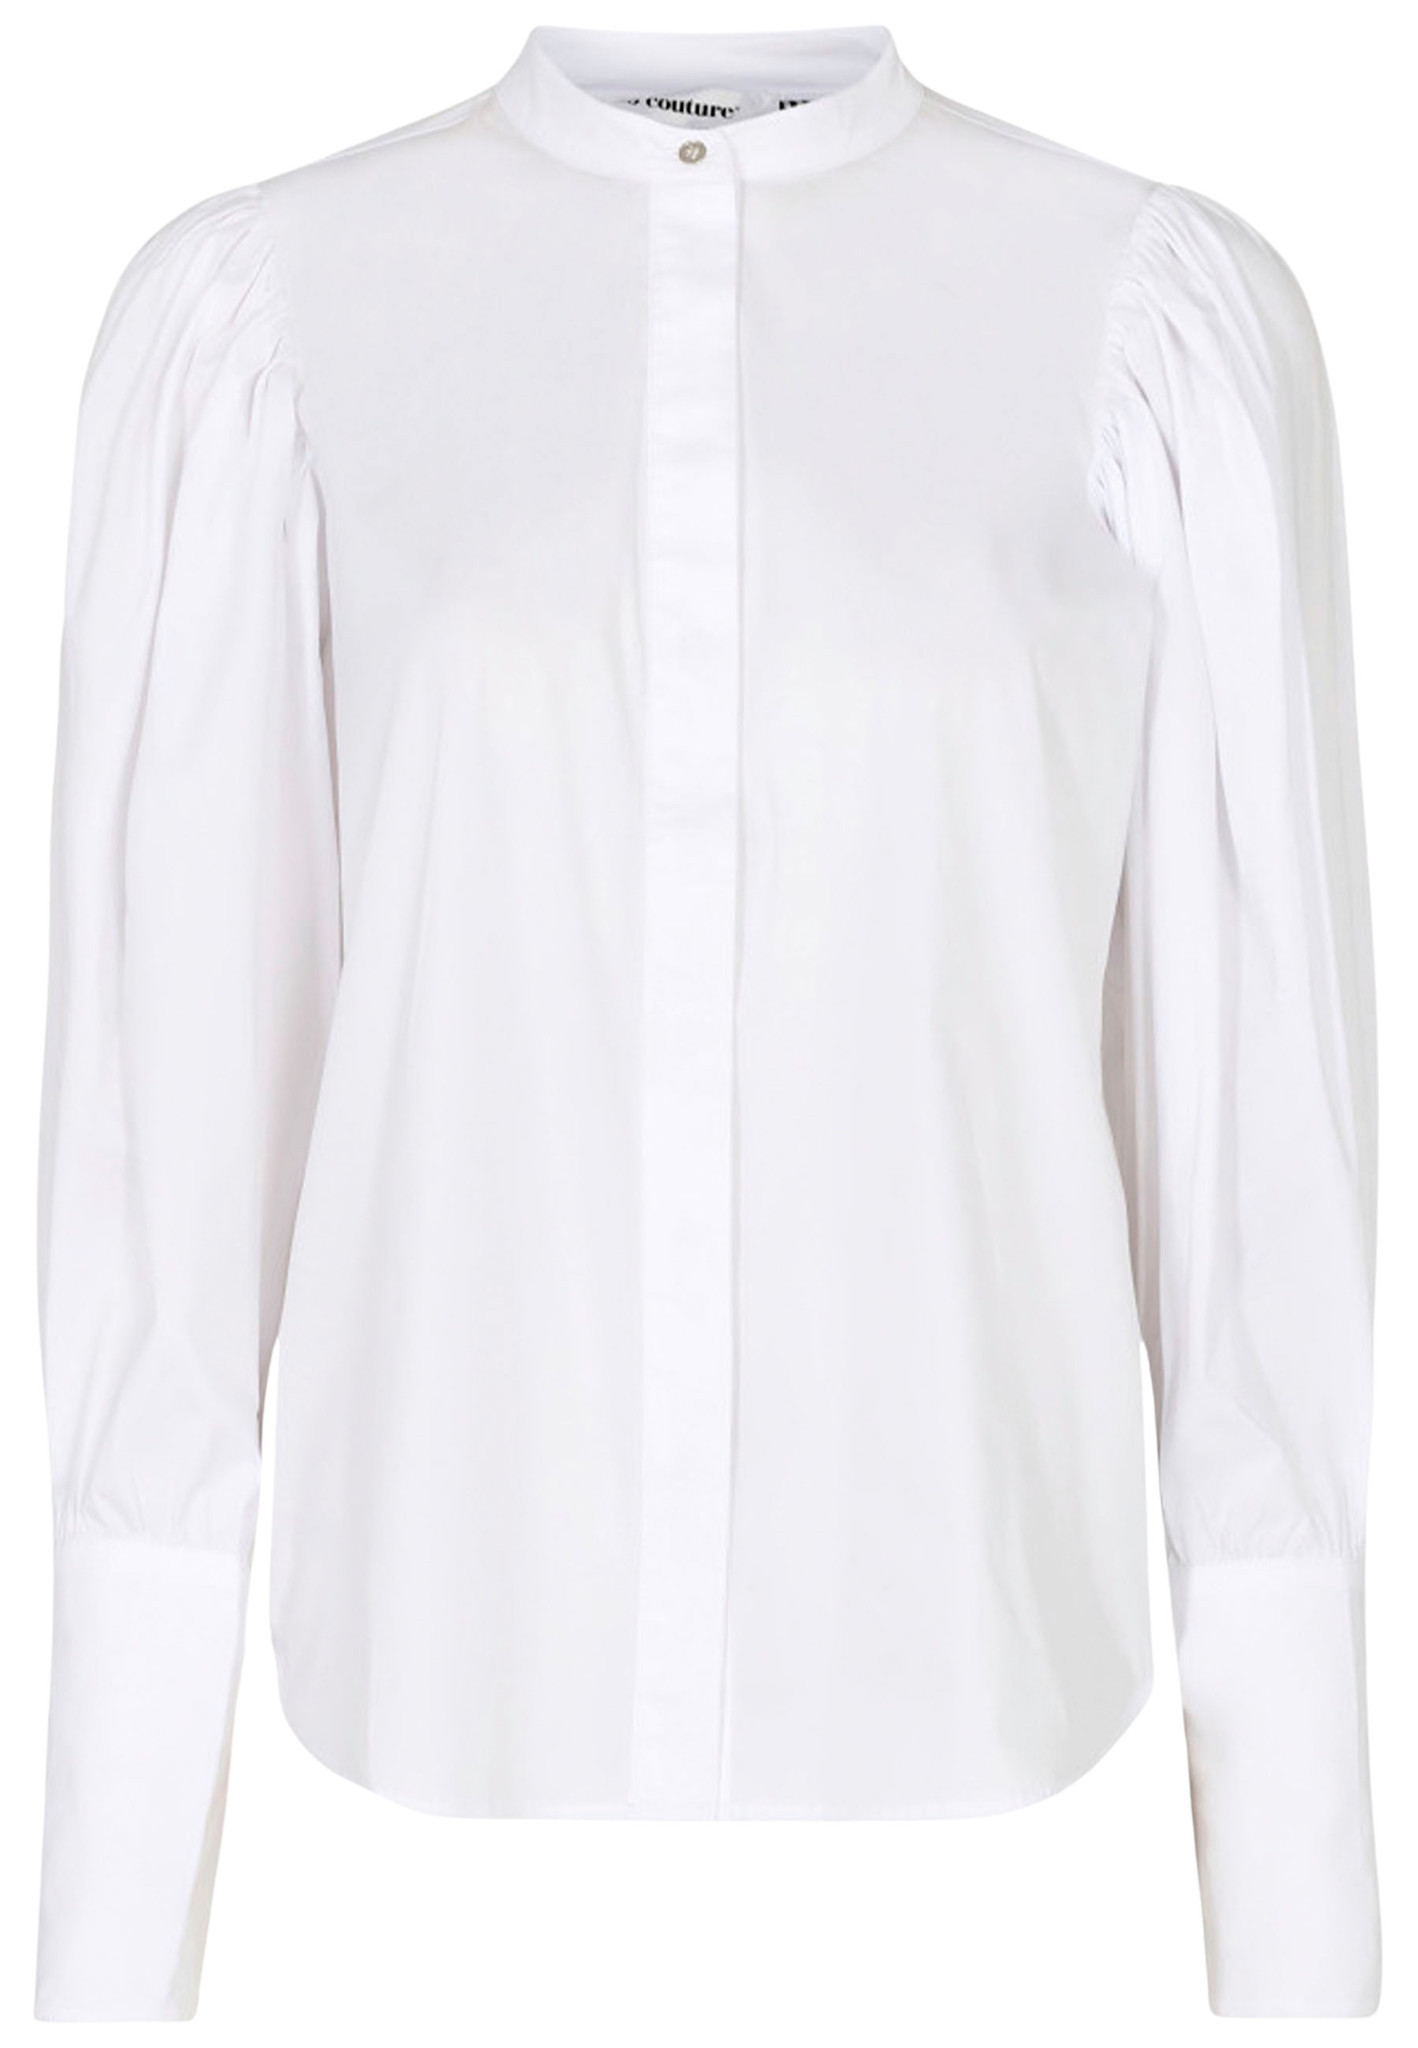 Co'Couture Annah blouse